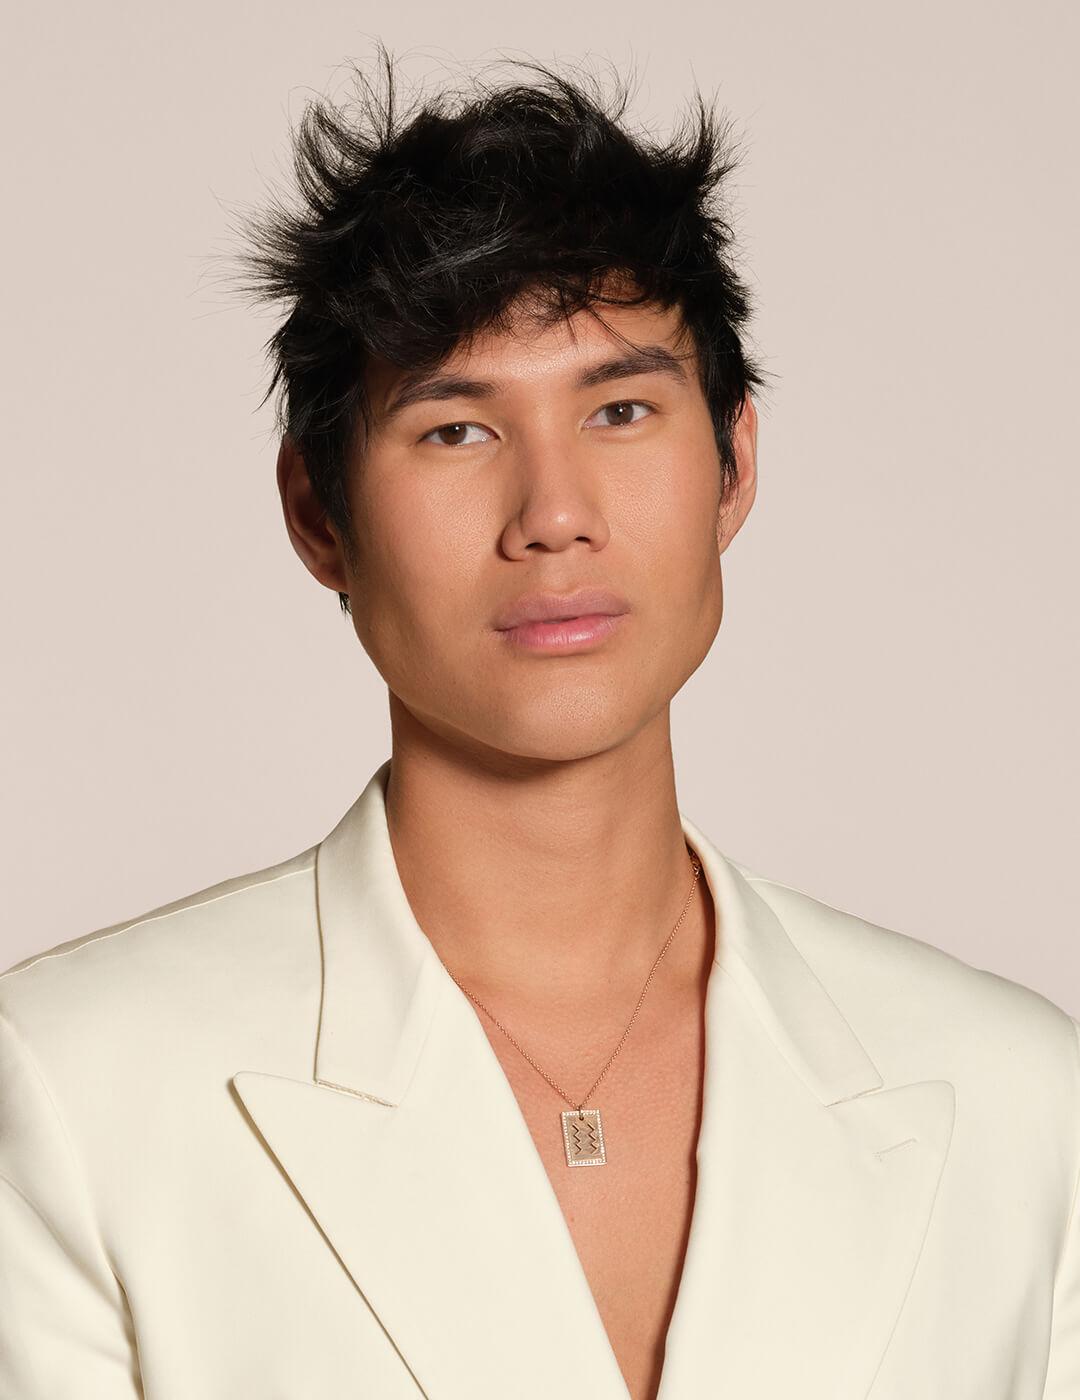 Profile image of Patrick Ta in a cream suit against cream background